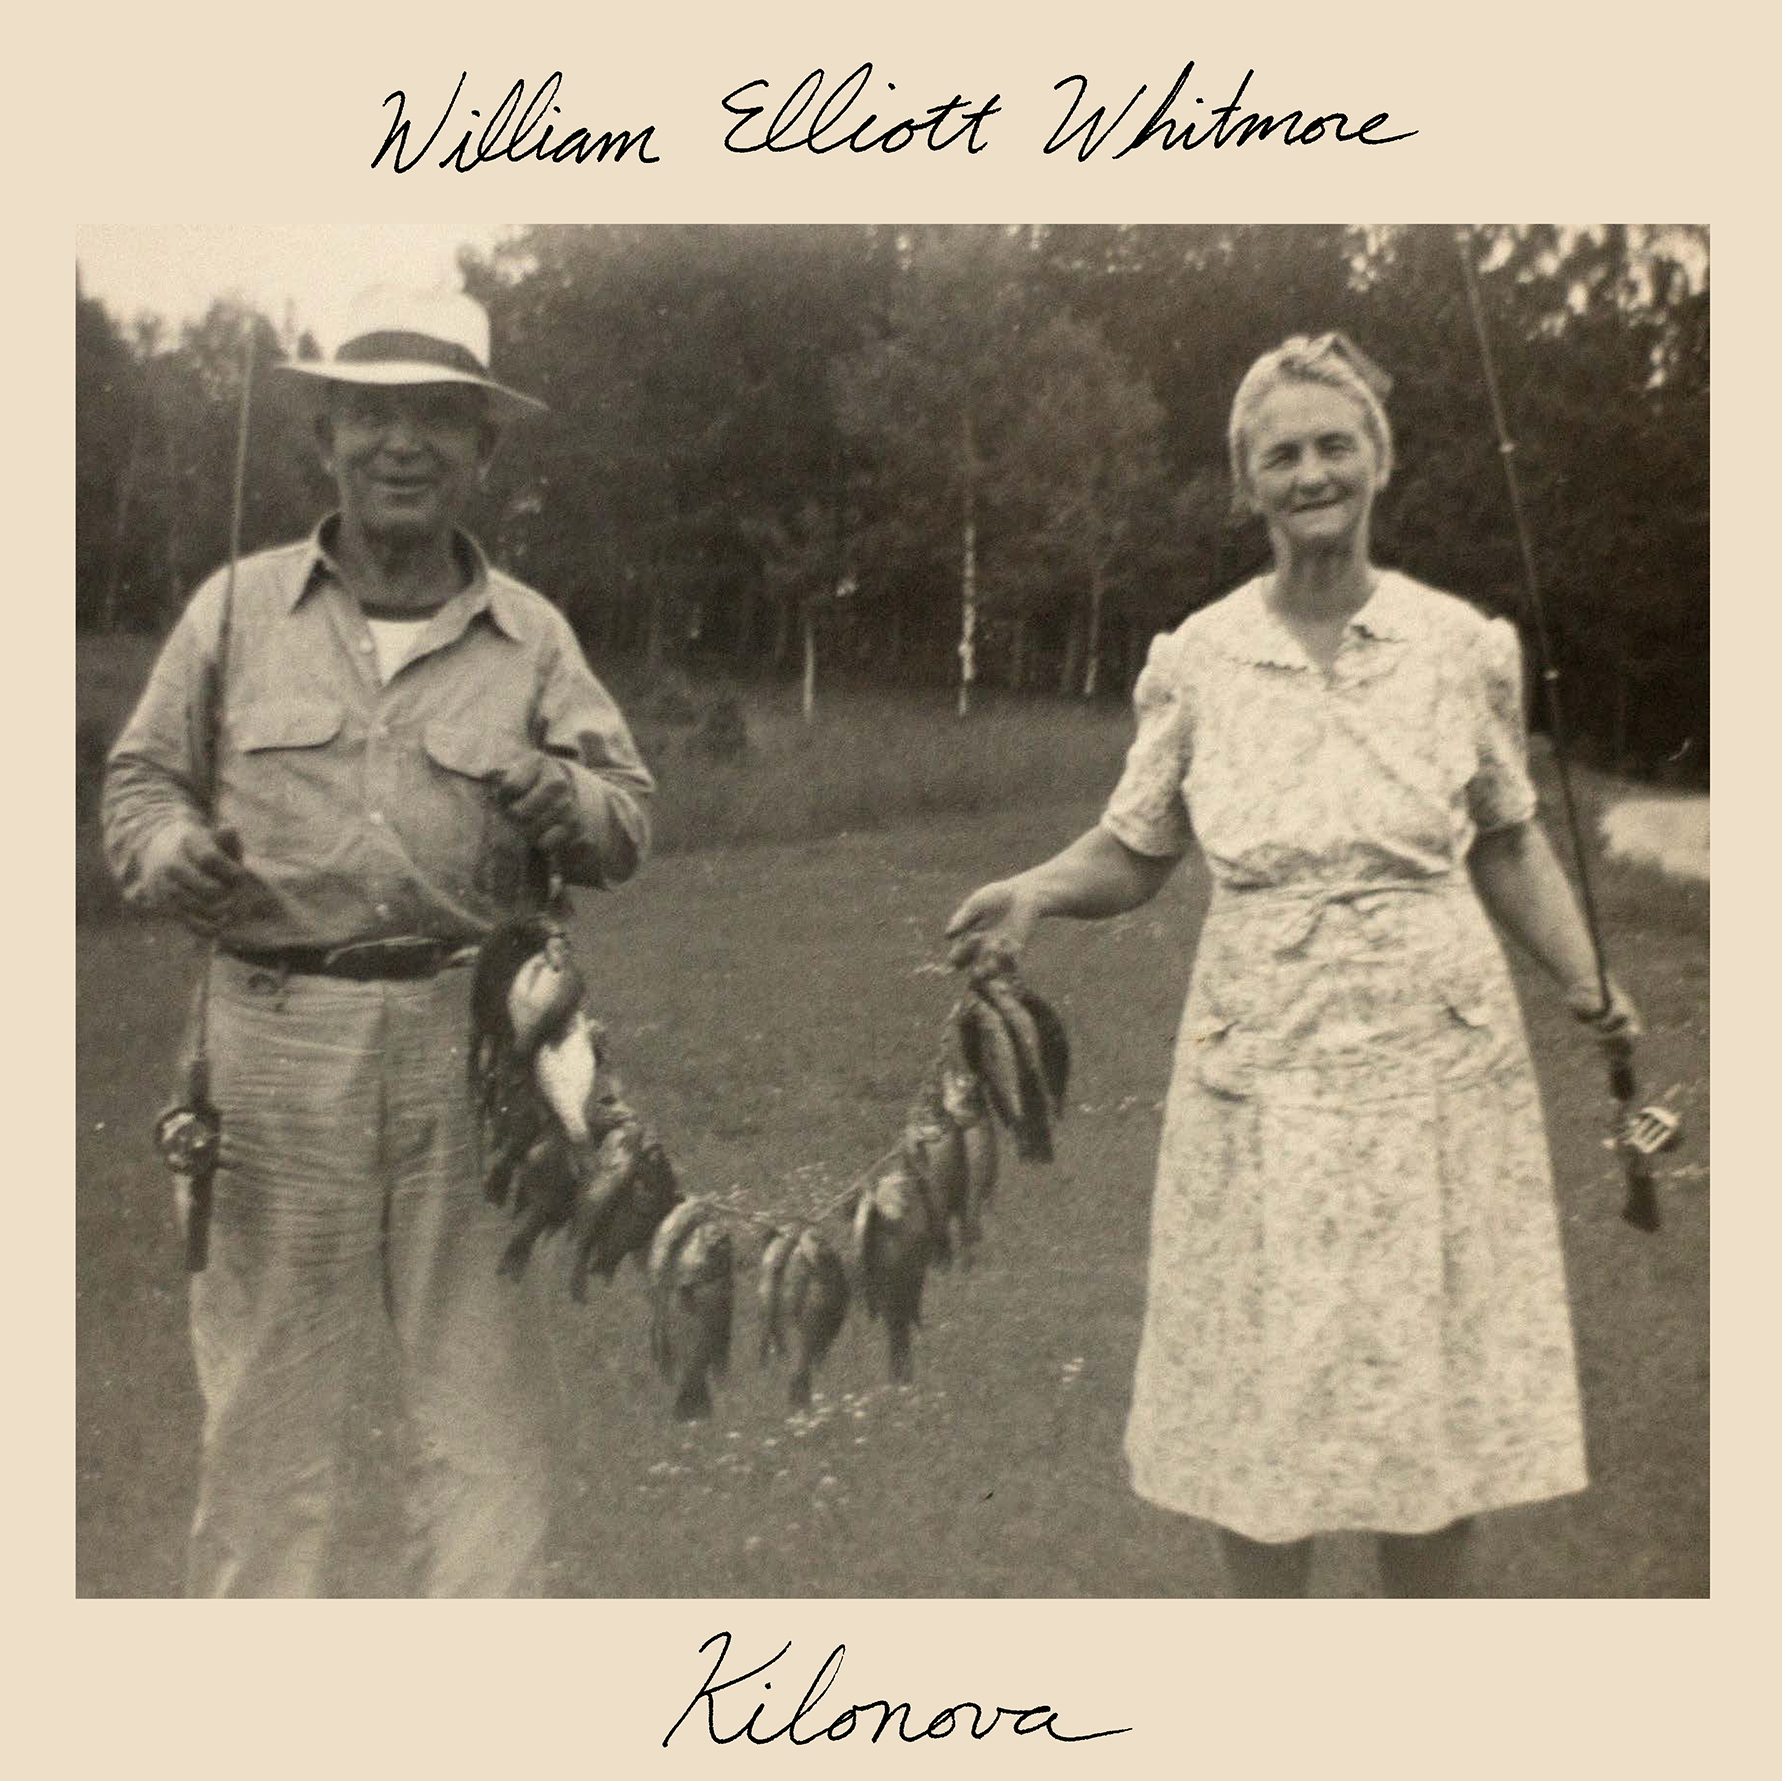 William Elliott Whitmore's "Kilonova" is available now